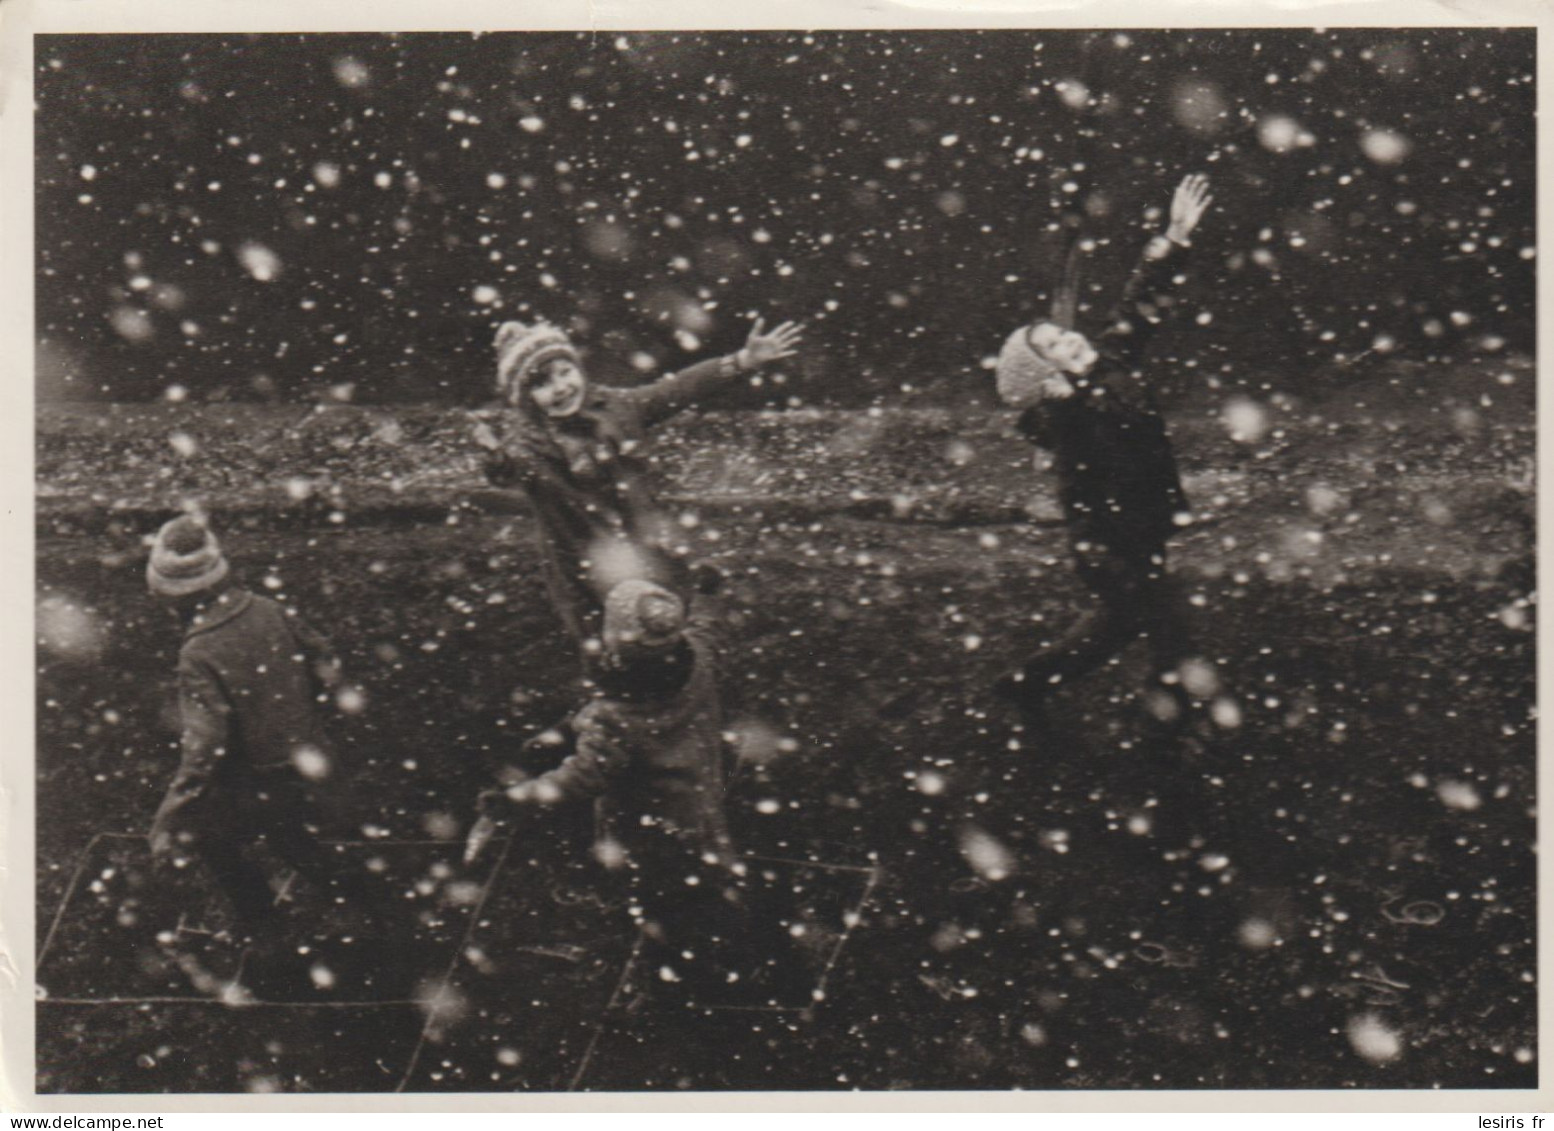 C.P. - PHOTO - THE FIRST SNOW - KAZAN - SOVIET UNION 1970 - VLADIMIR ZOTOV - COMPTOIR DE LA PHOTOGRAPHIE - X166 - Russie